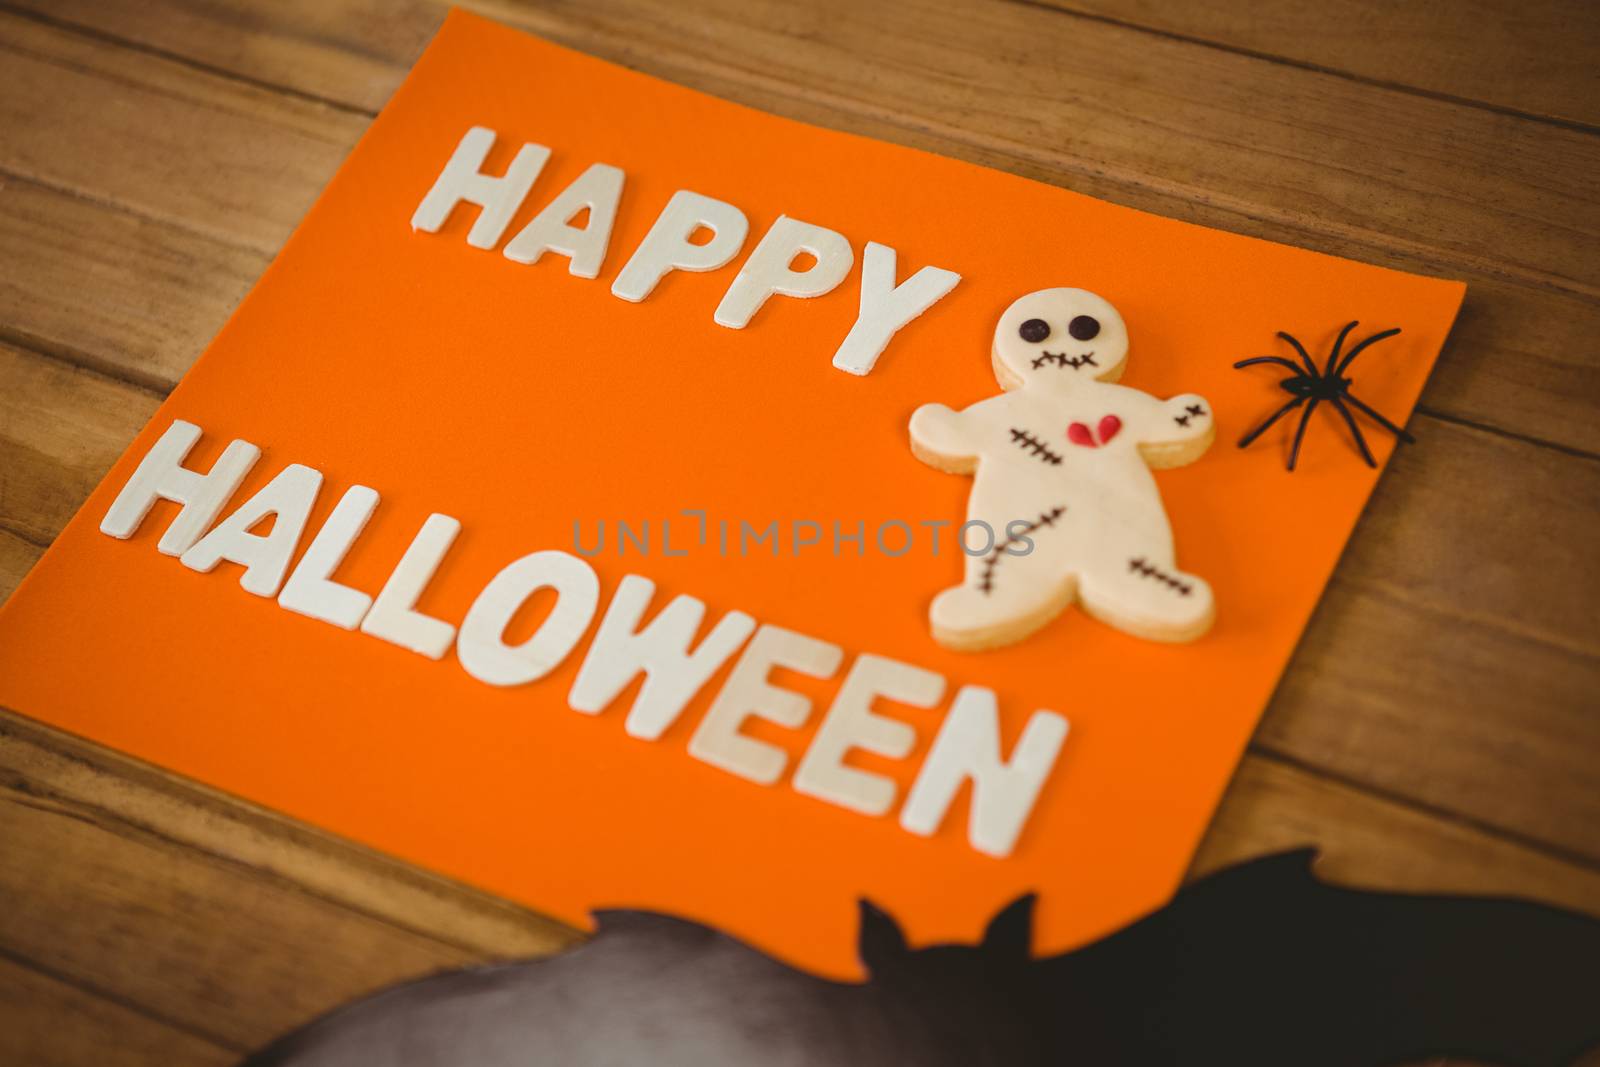 Happy Halloween text with cookies on orange paper by Wavebreakmedia